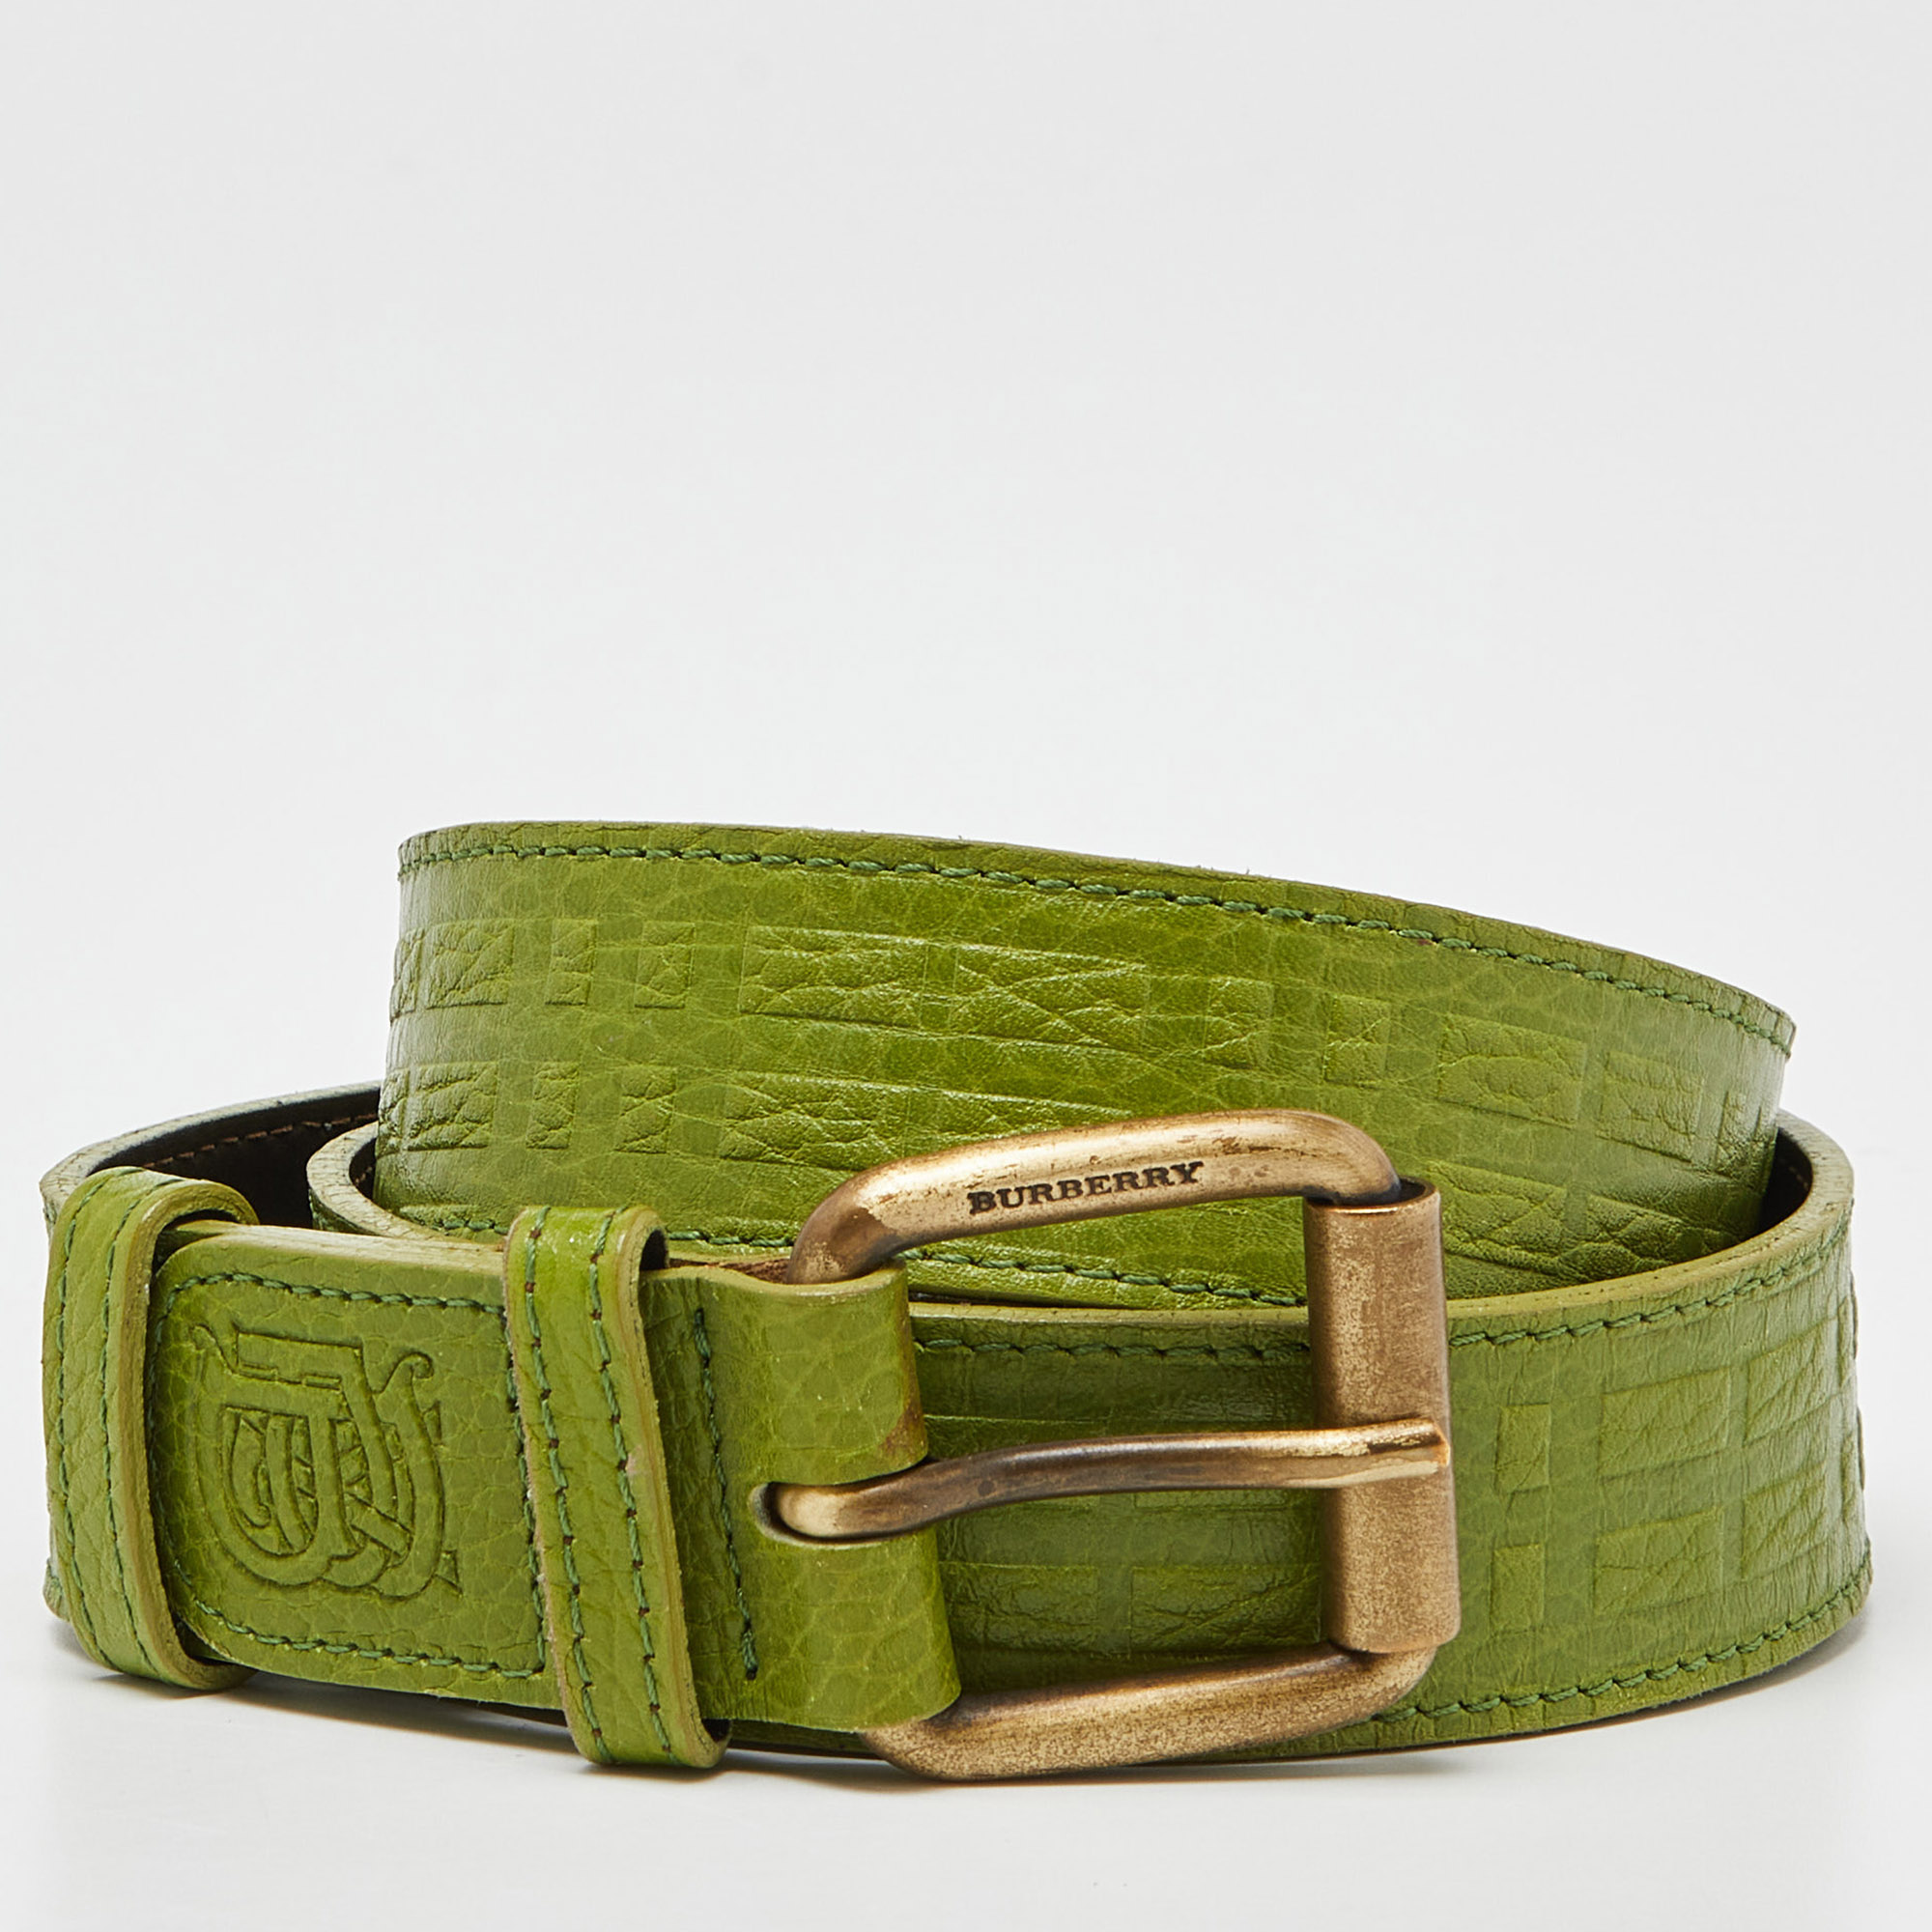 Burberry green leather buckle belt 100cm